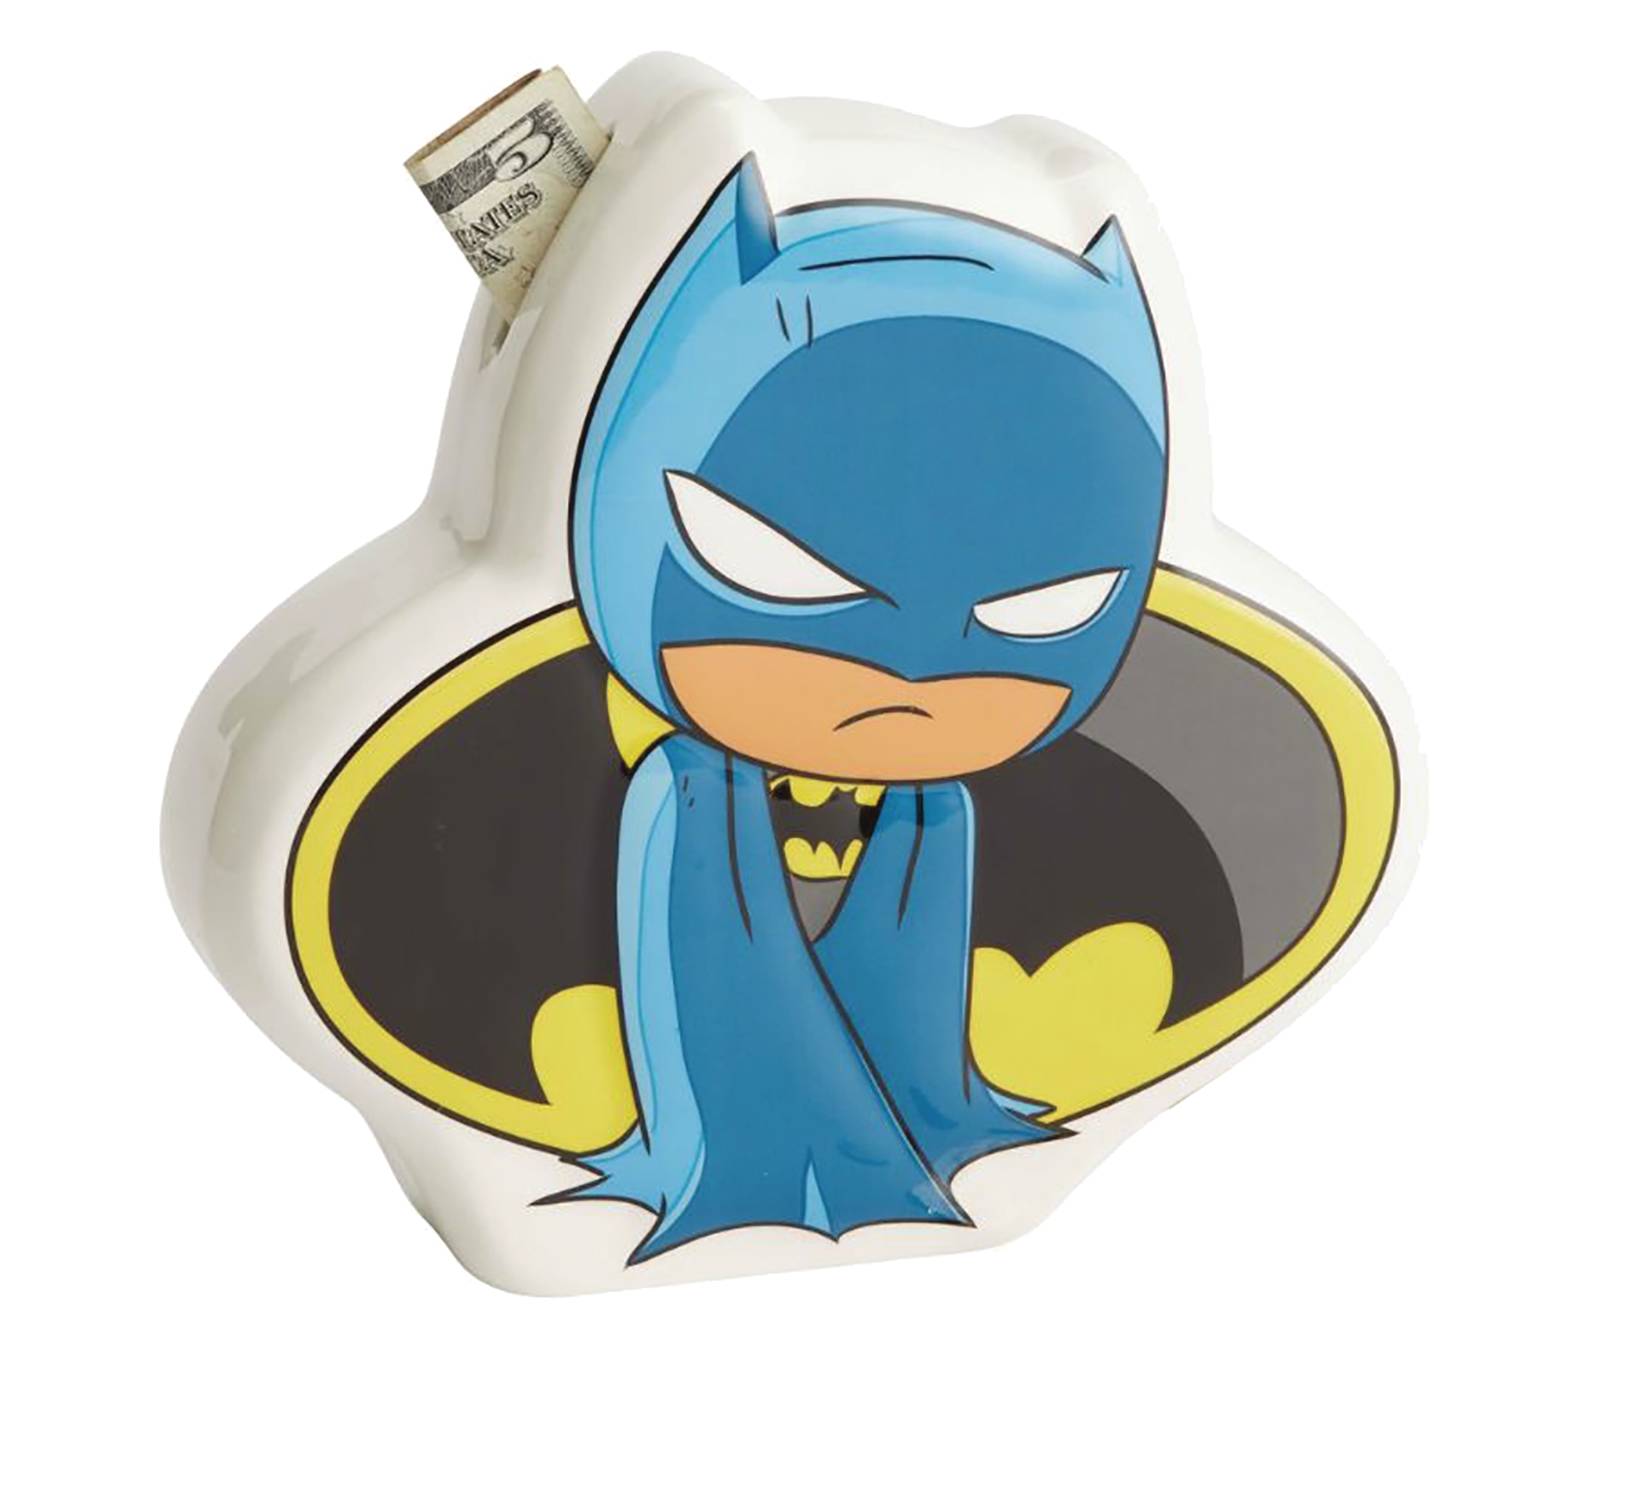 DC Super Friends Batman Coin Bank